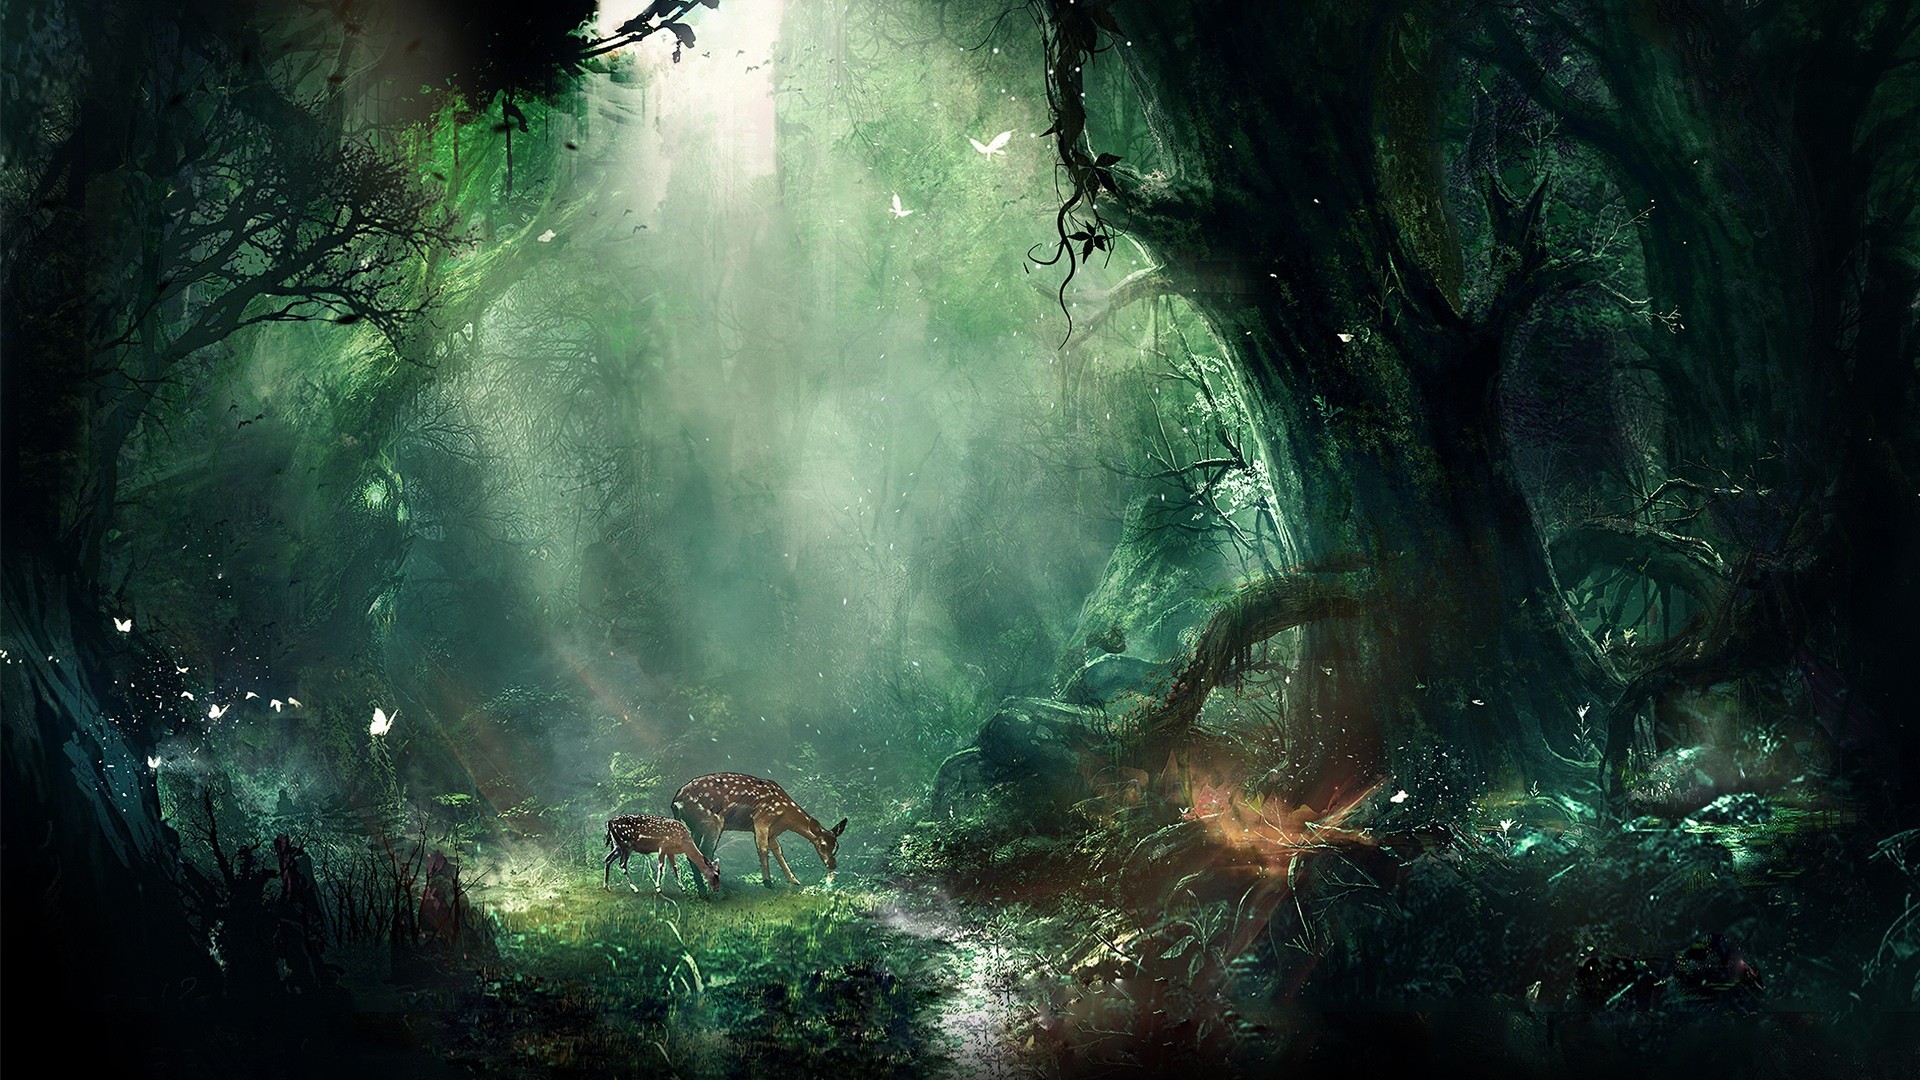 Fantasy Forest Pictures  Download Free Images on Unsplash